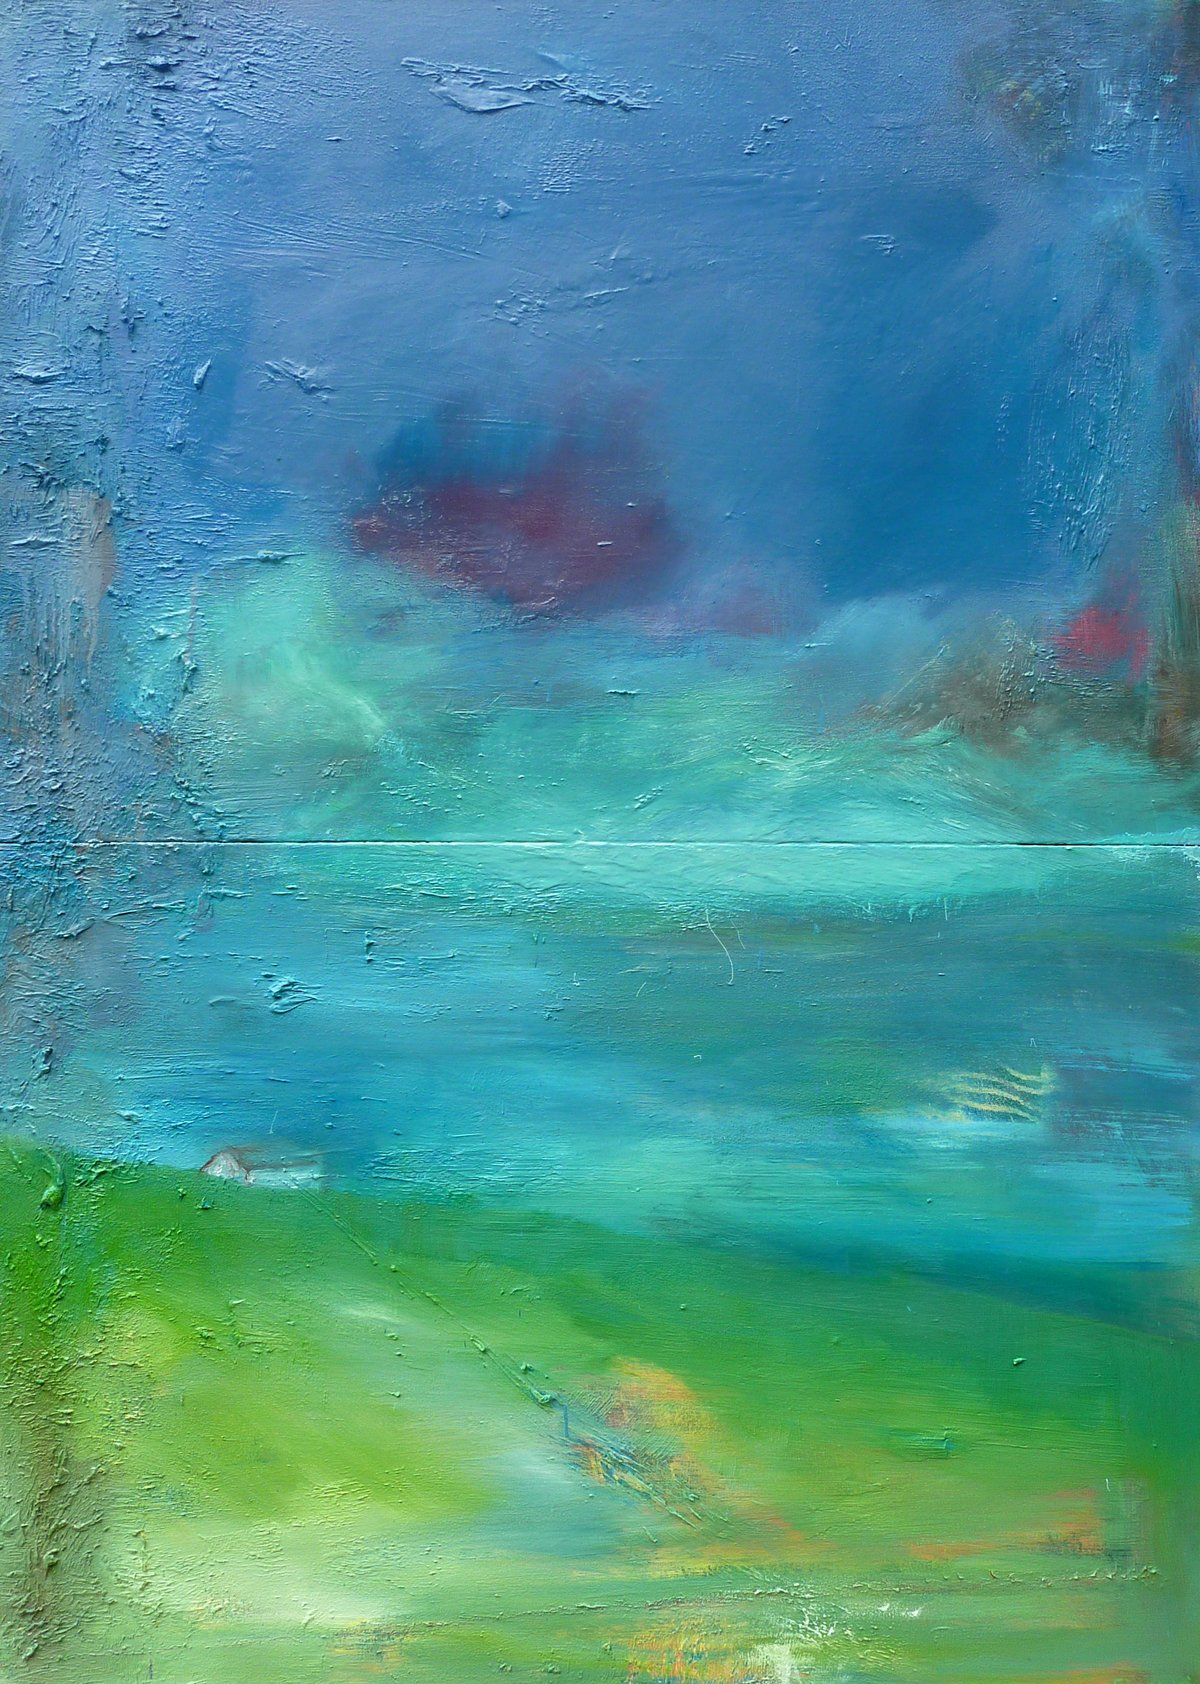 Edge of Isolation - Oil on Canvas - 125cm x 89cm